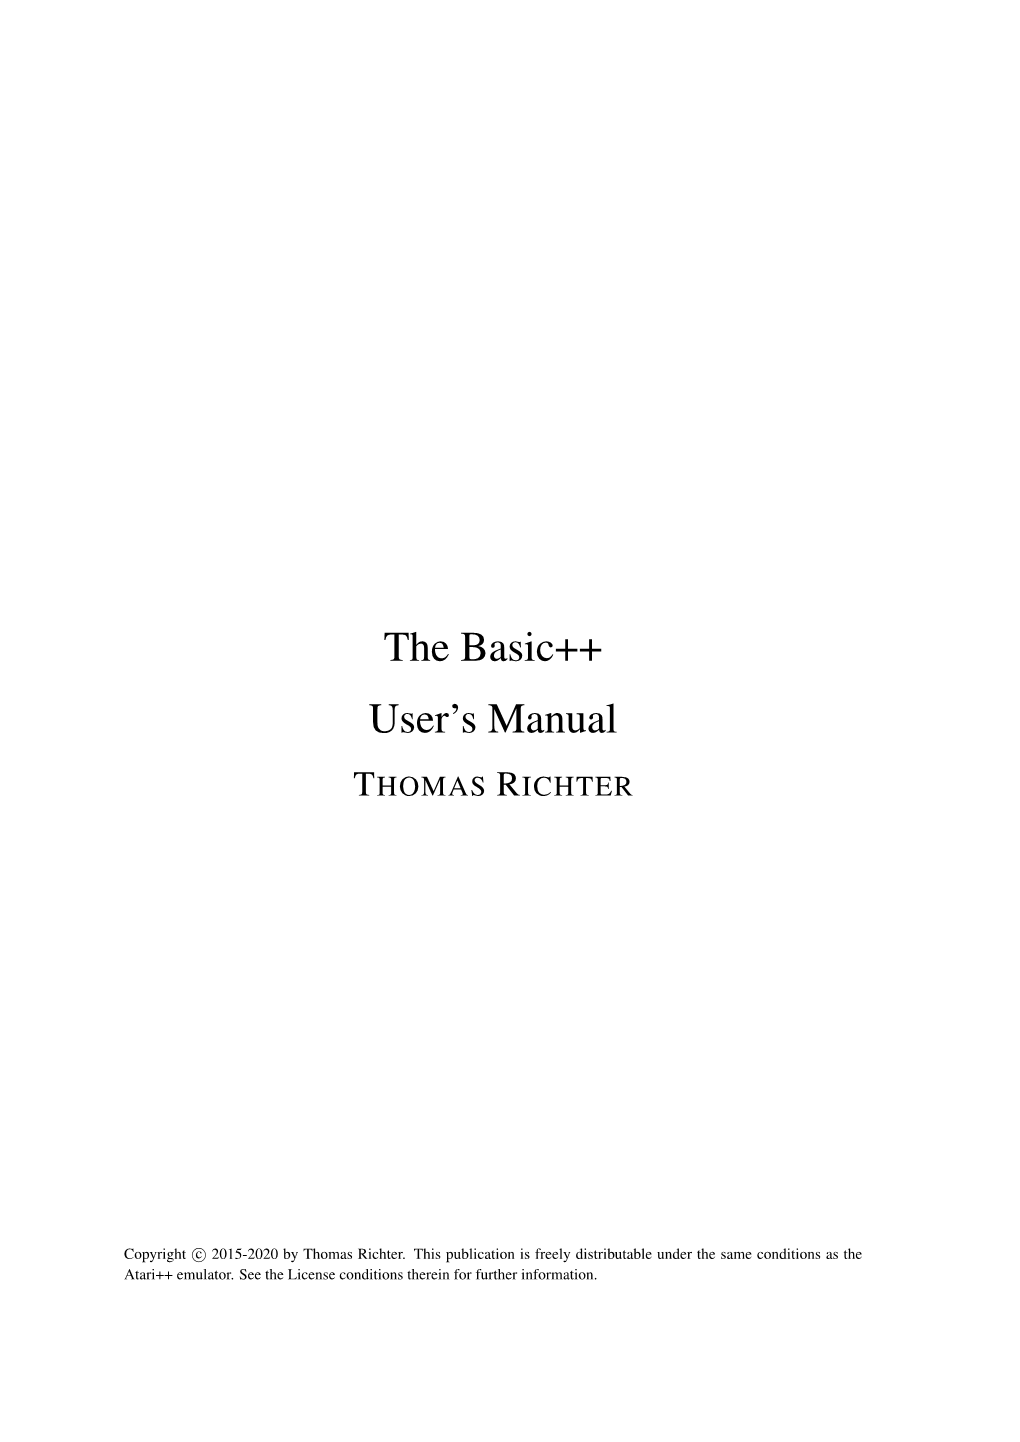 The Basic++ User's Manual